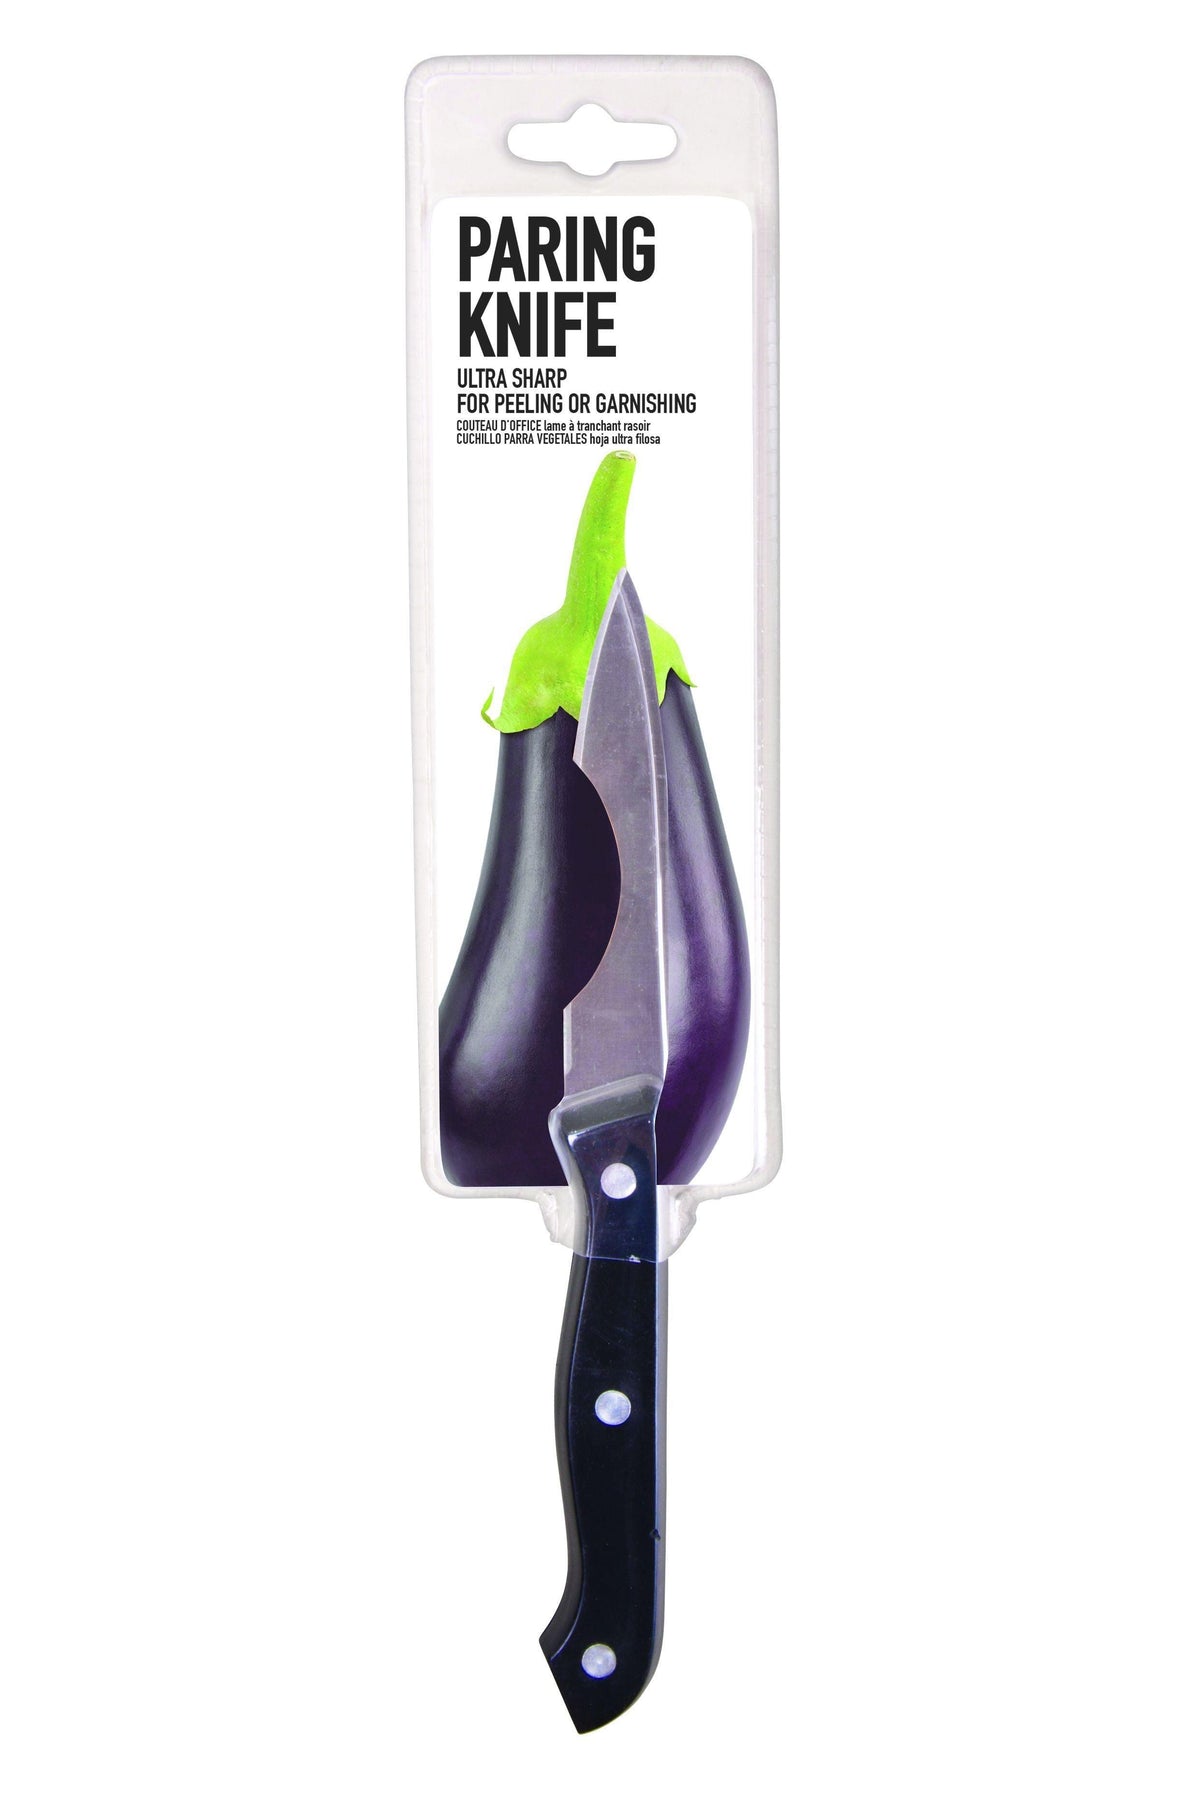 Paring Knife | Ultra Sharp | For Peeling Or Garnishing - Choice Stores